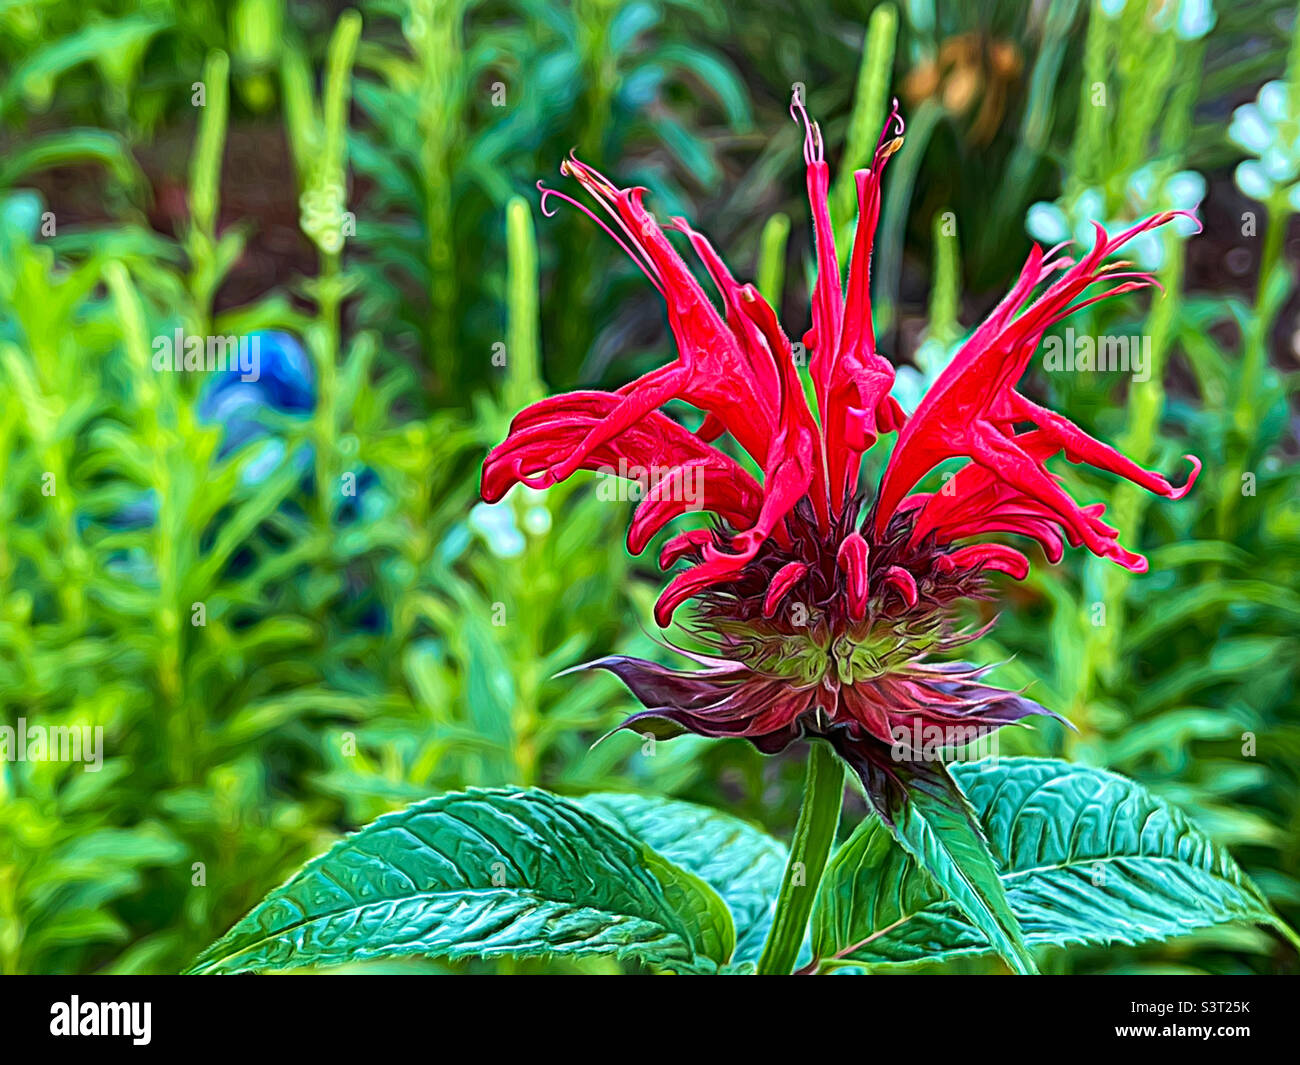 Hermosa flor de salvia de color rojo fresco. Alias sabio. Foto de stock